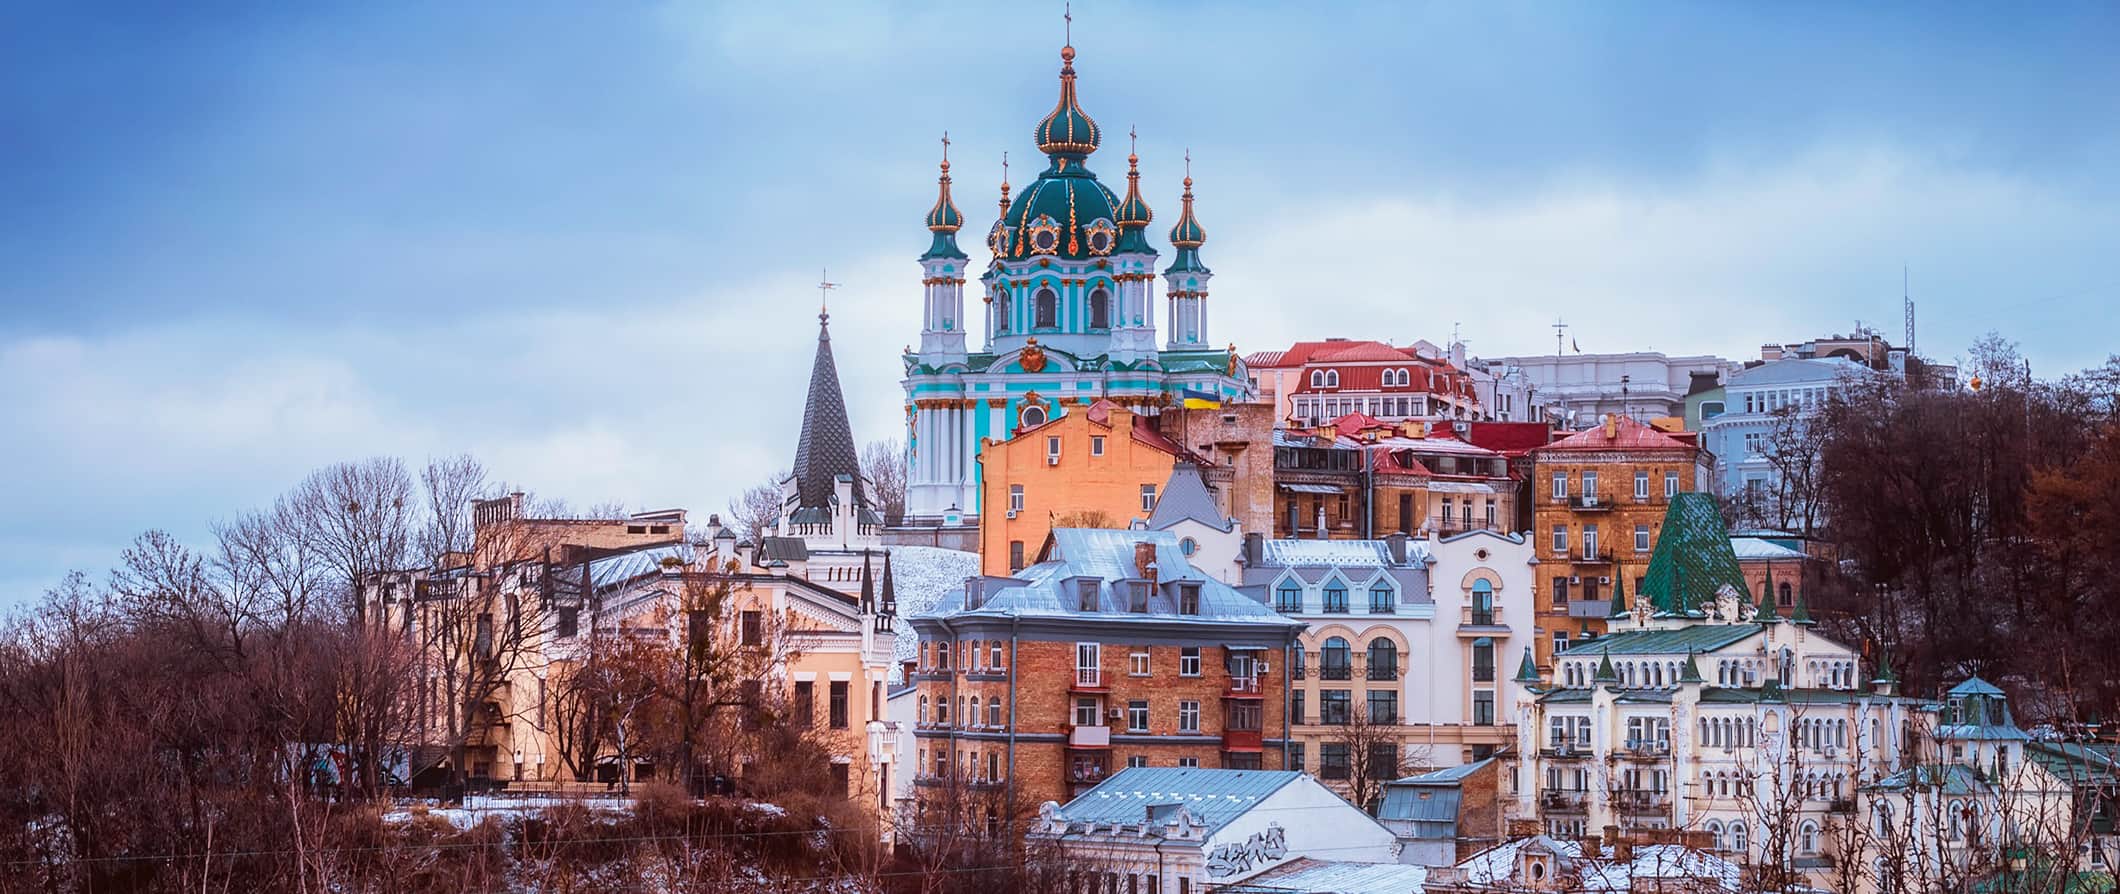 The colorful and historic architecture in Kyiv, Ukraine in winter